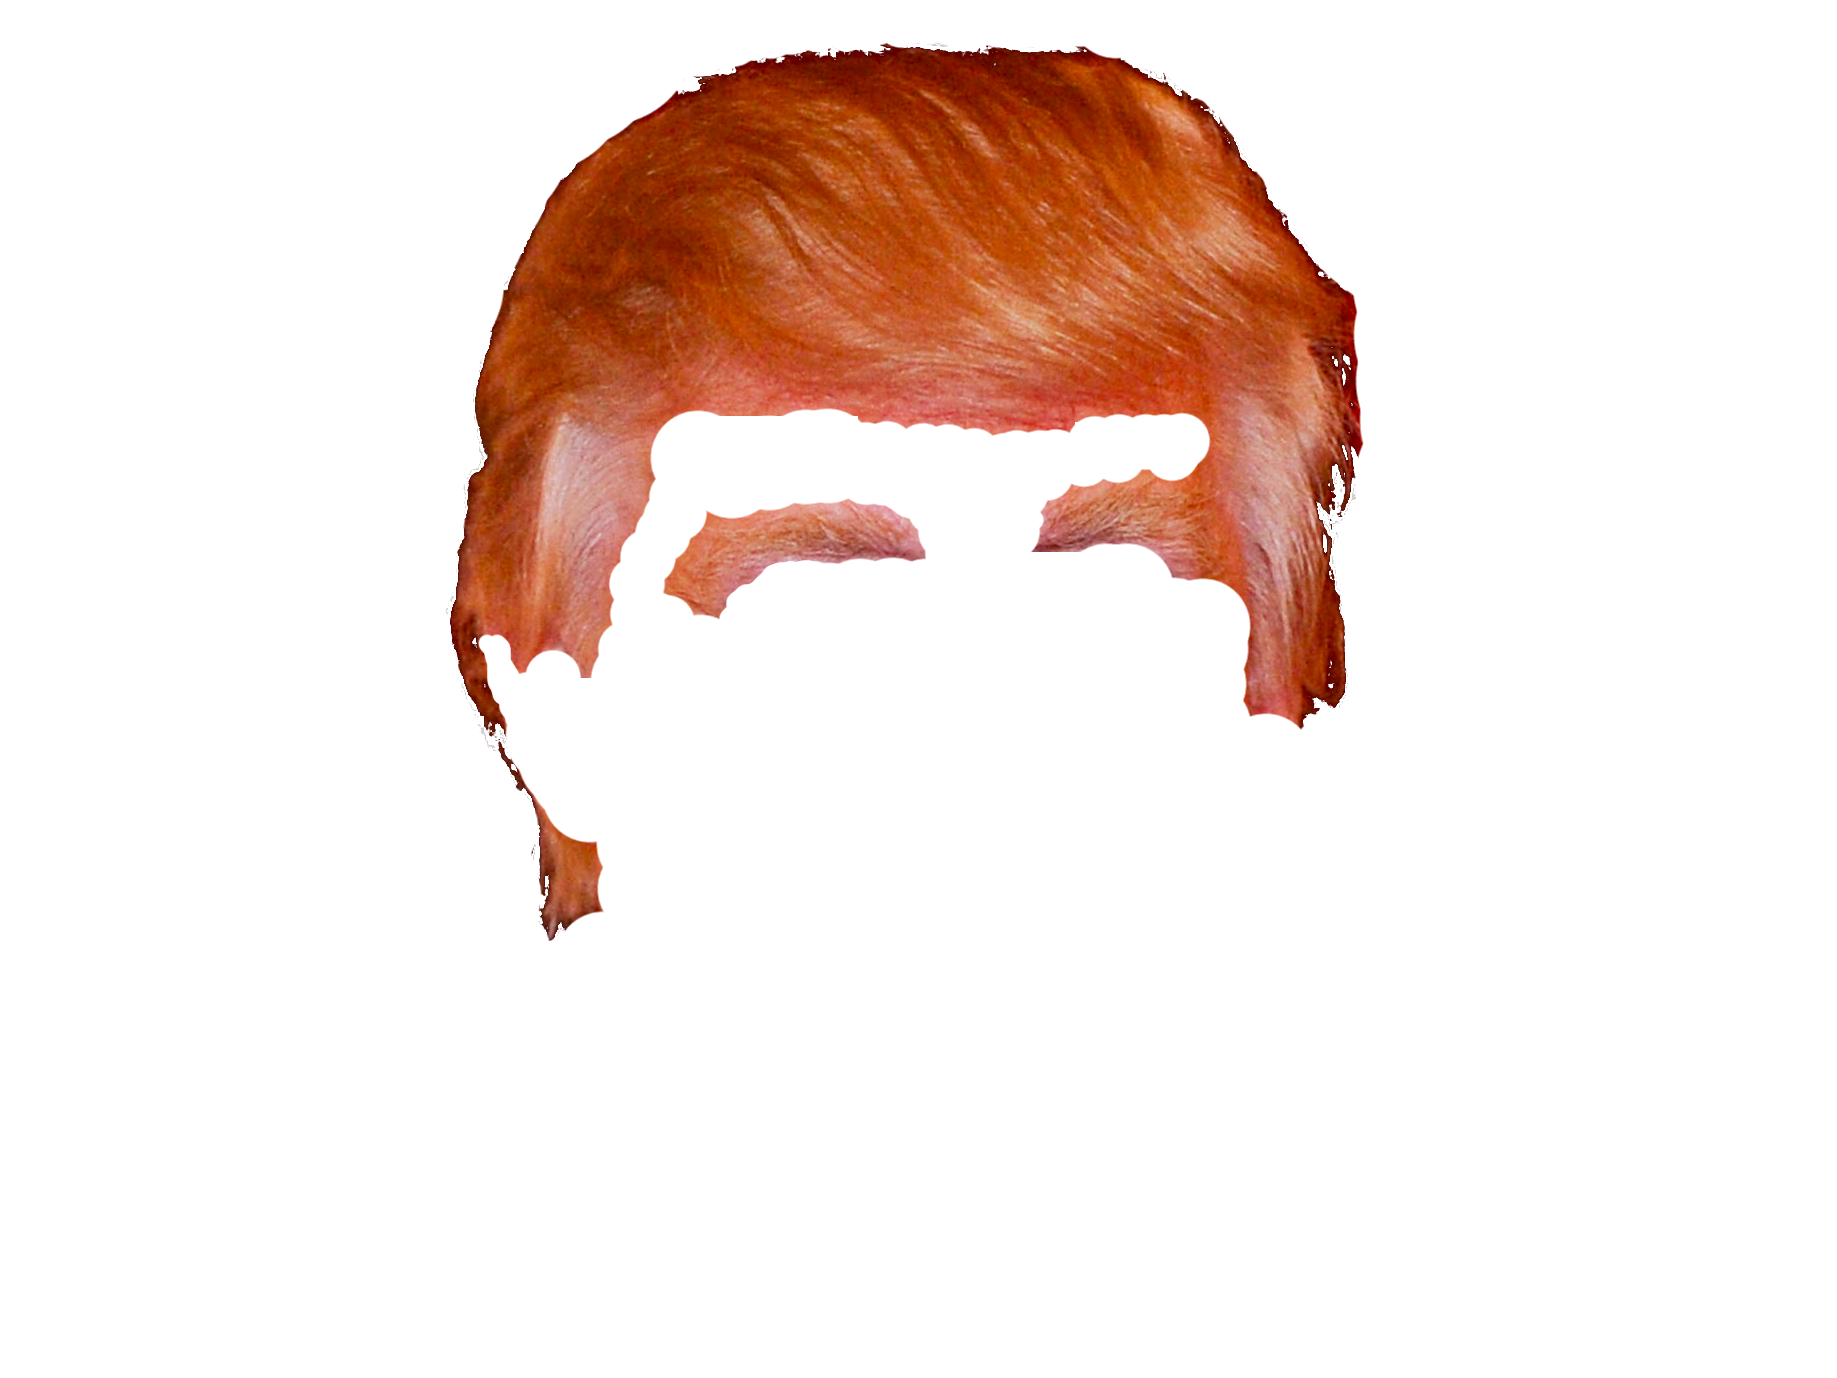 Blonde Trump Hair PNG Illustration - wide 4